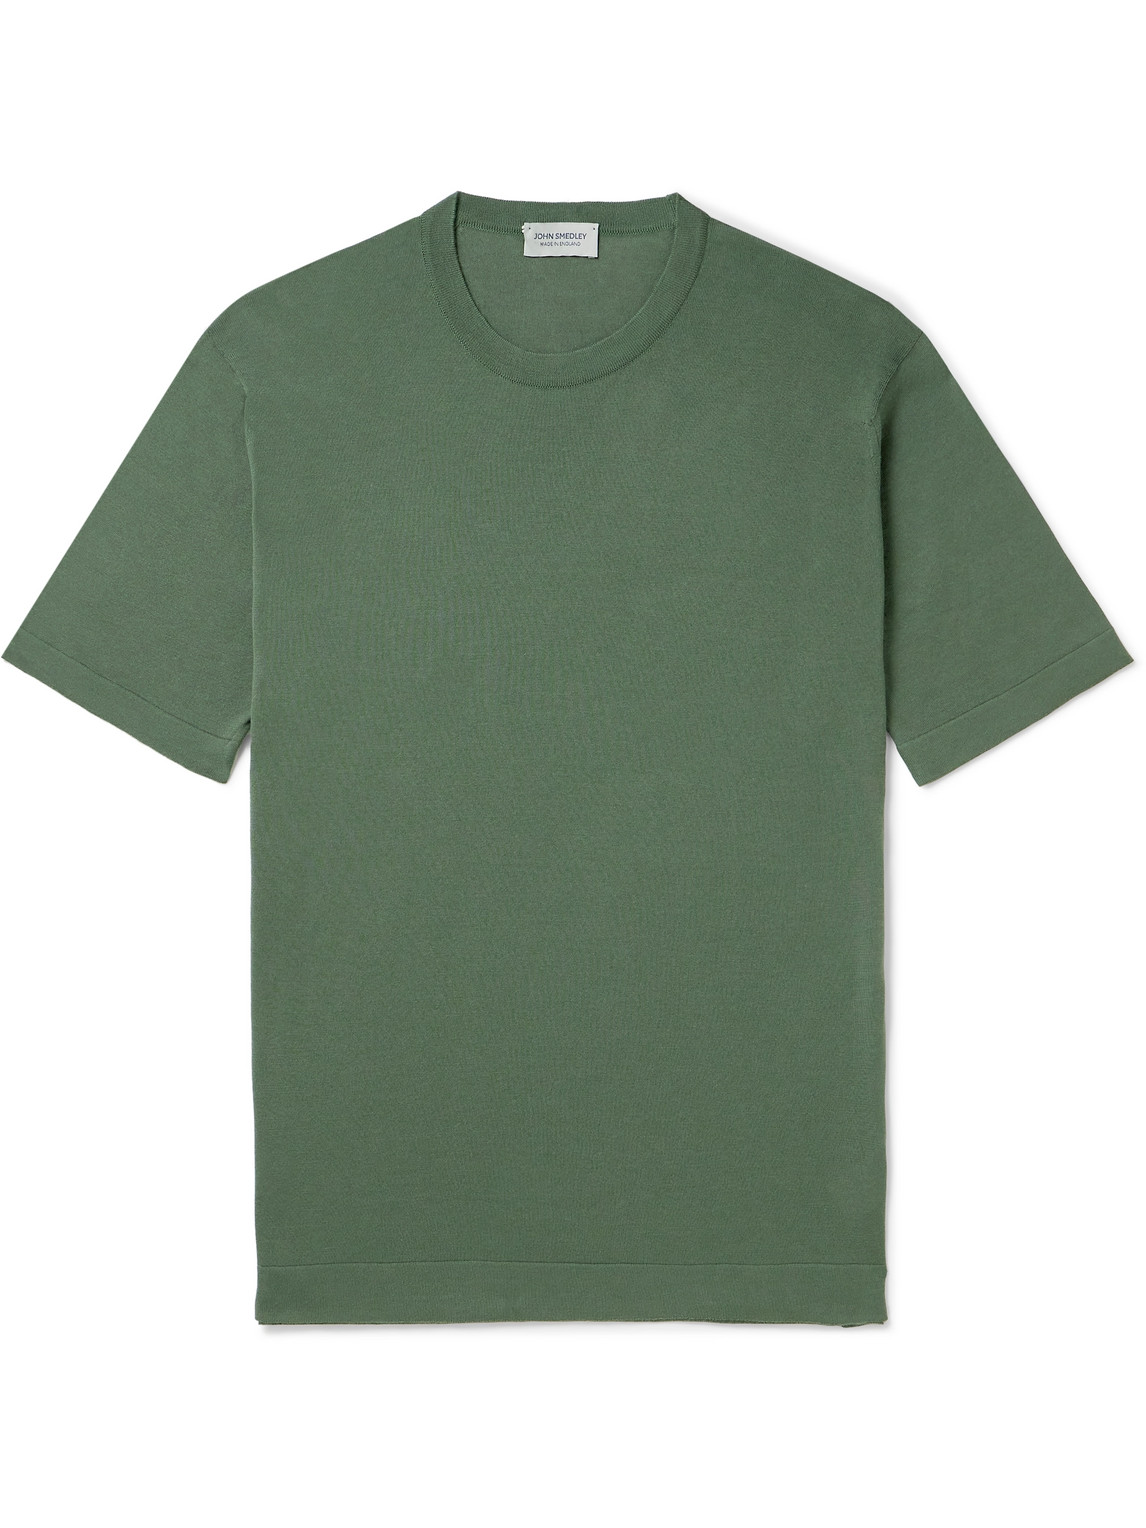 John Smedley Lorca Slim-fit Sea Island Cotton T-shirt In Green